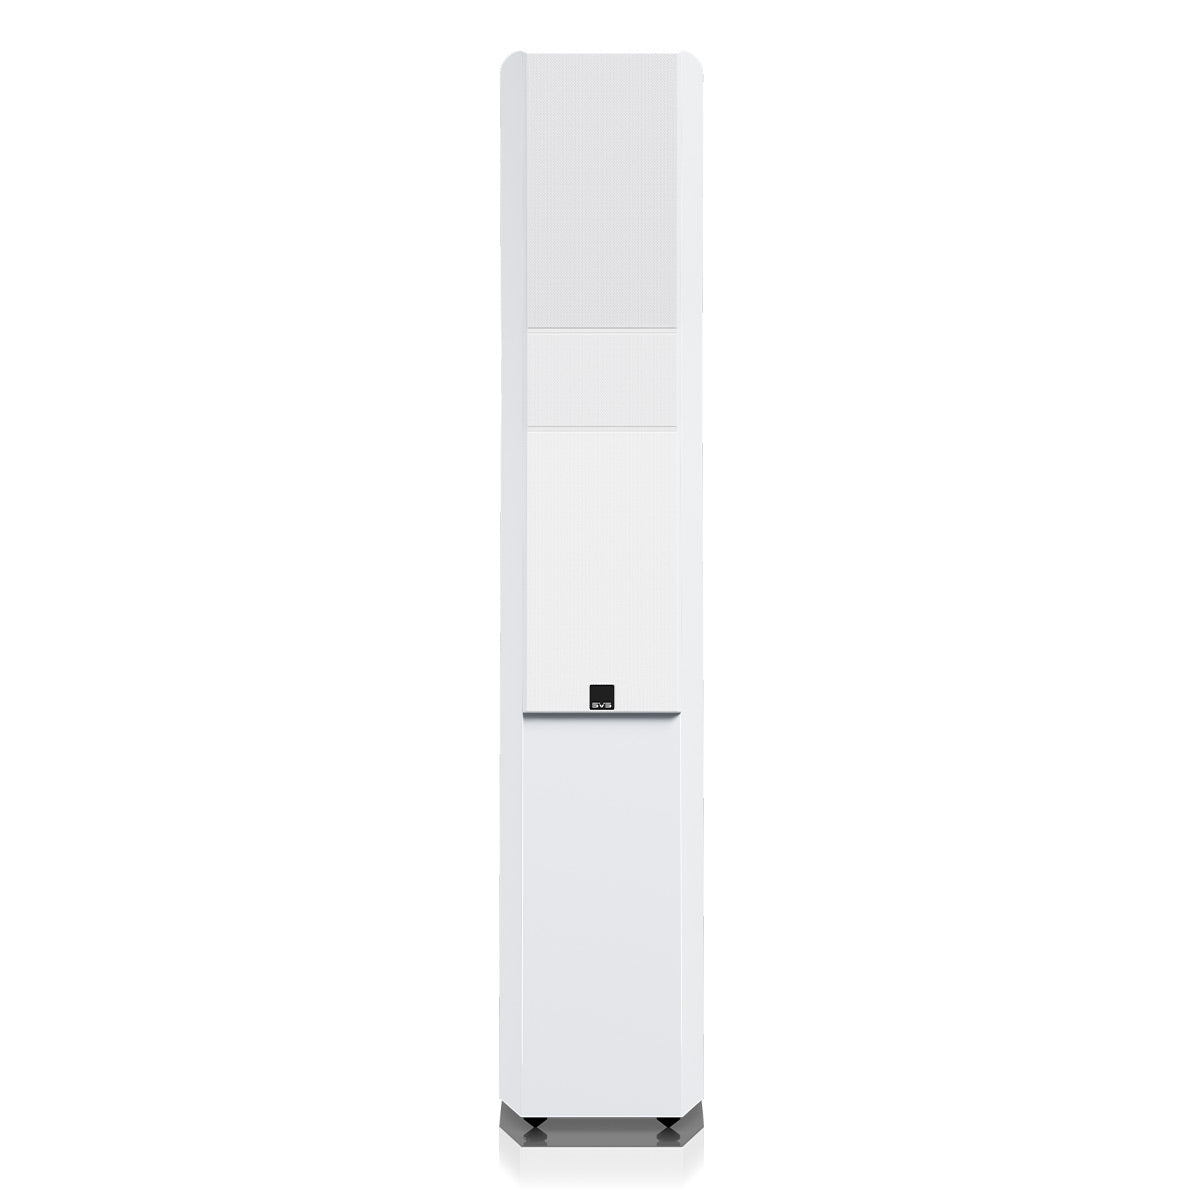 SVS Ultra Evolution 3-Way Tower Speaker - Each (Piano Gloss White)